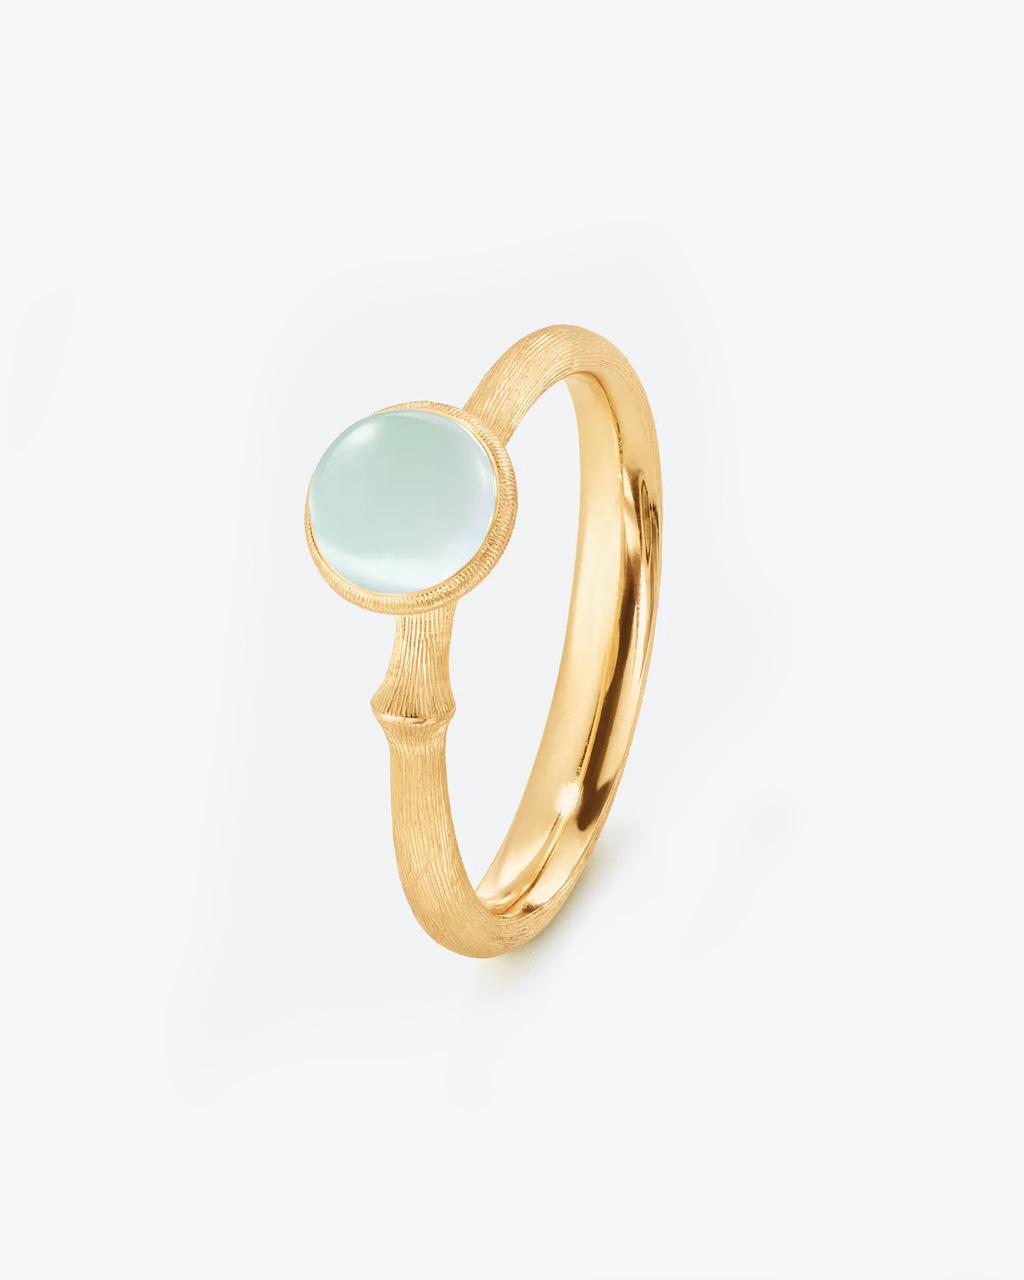 Ole Lynggaard 'Lotus' Aquamarine Ring - Tiny